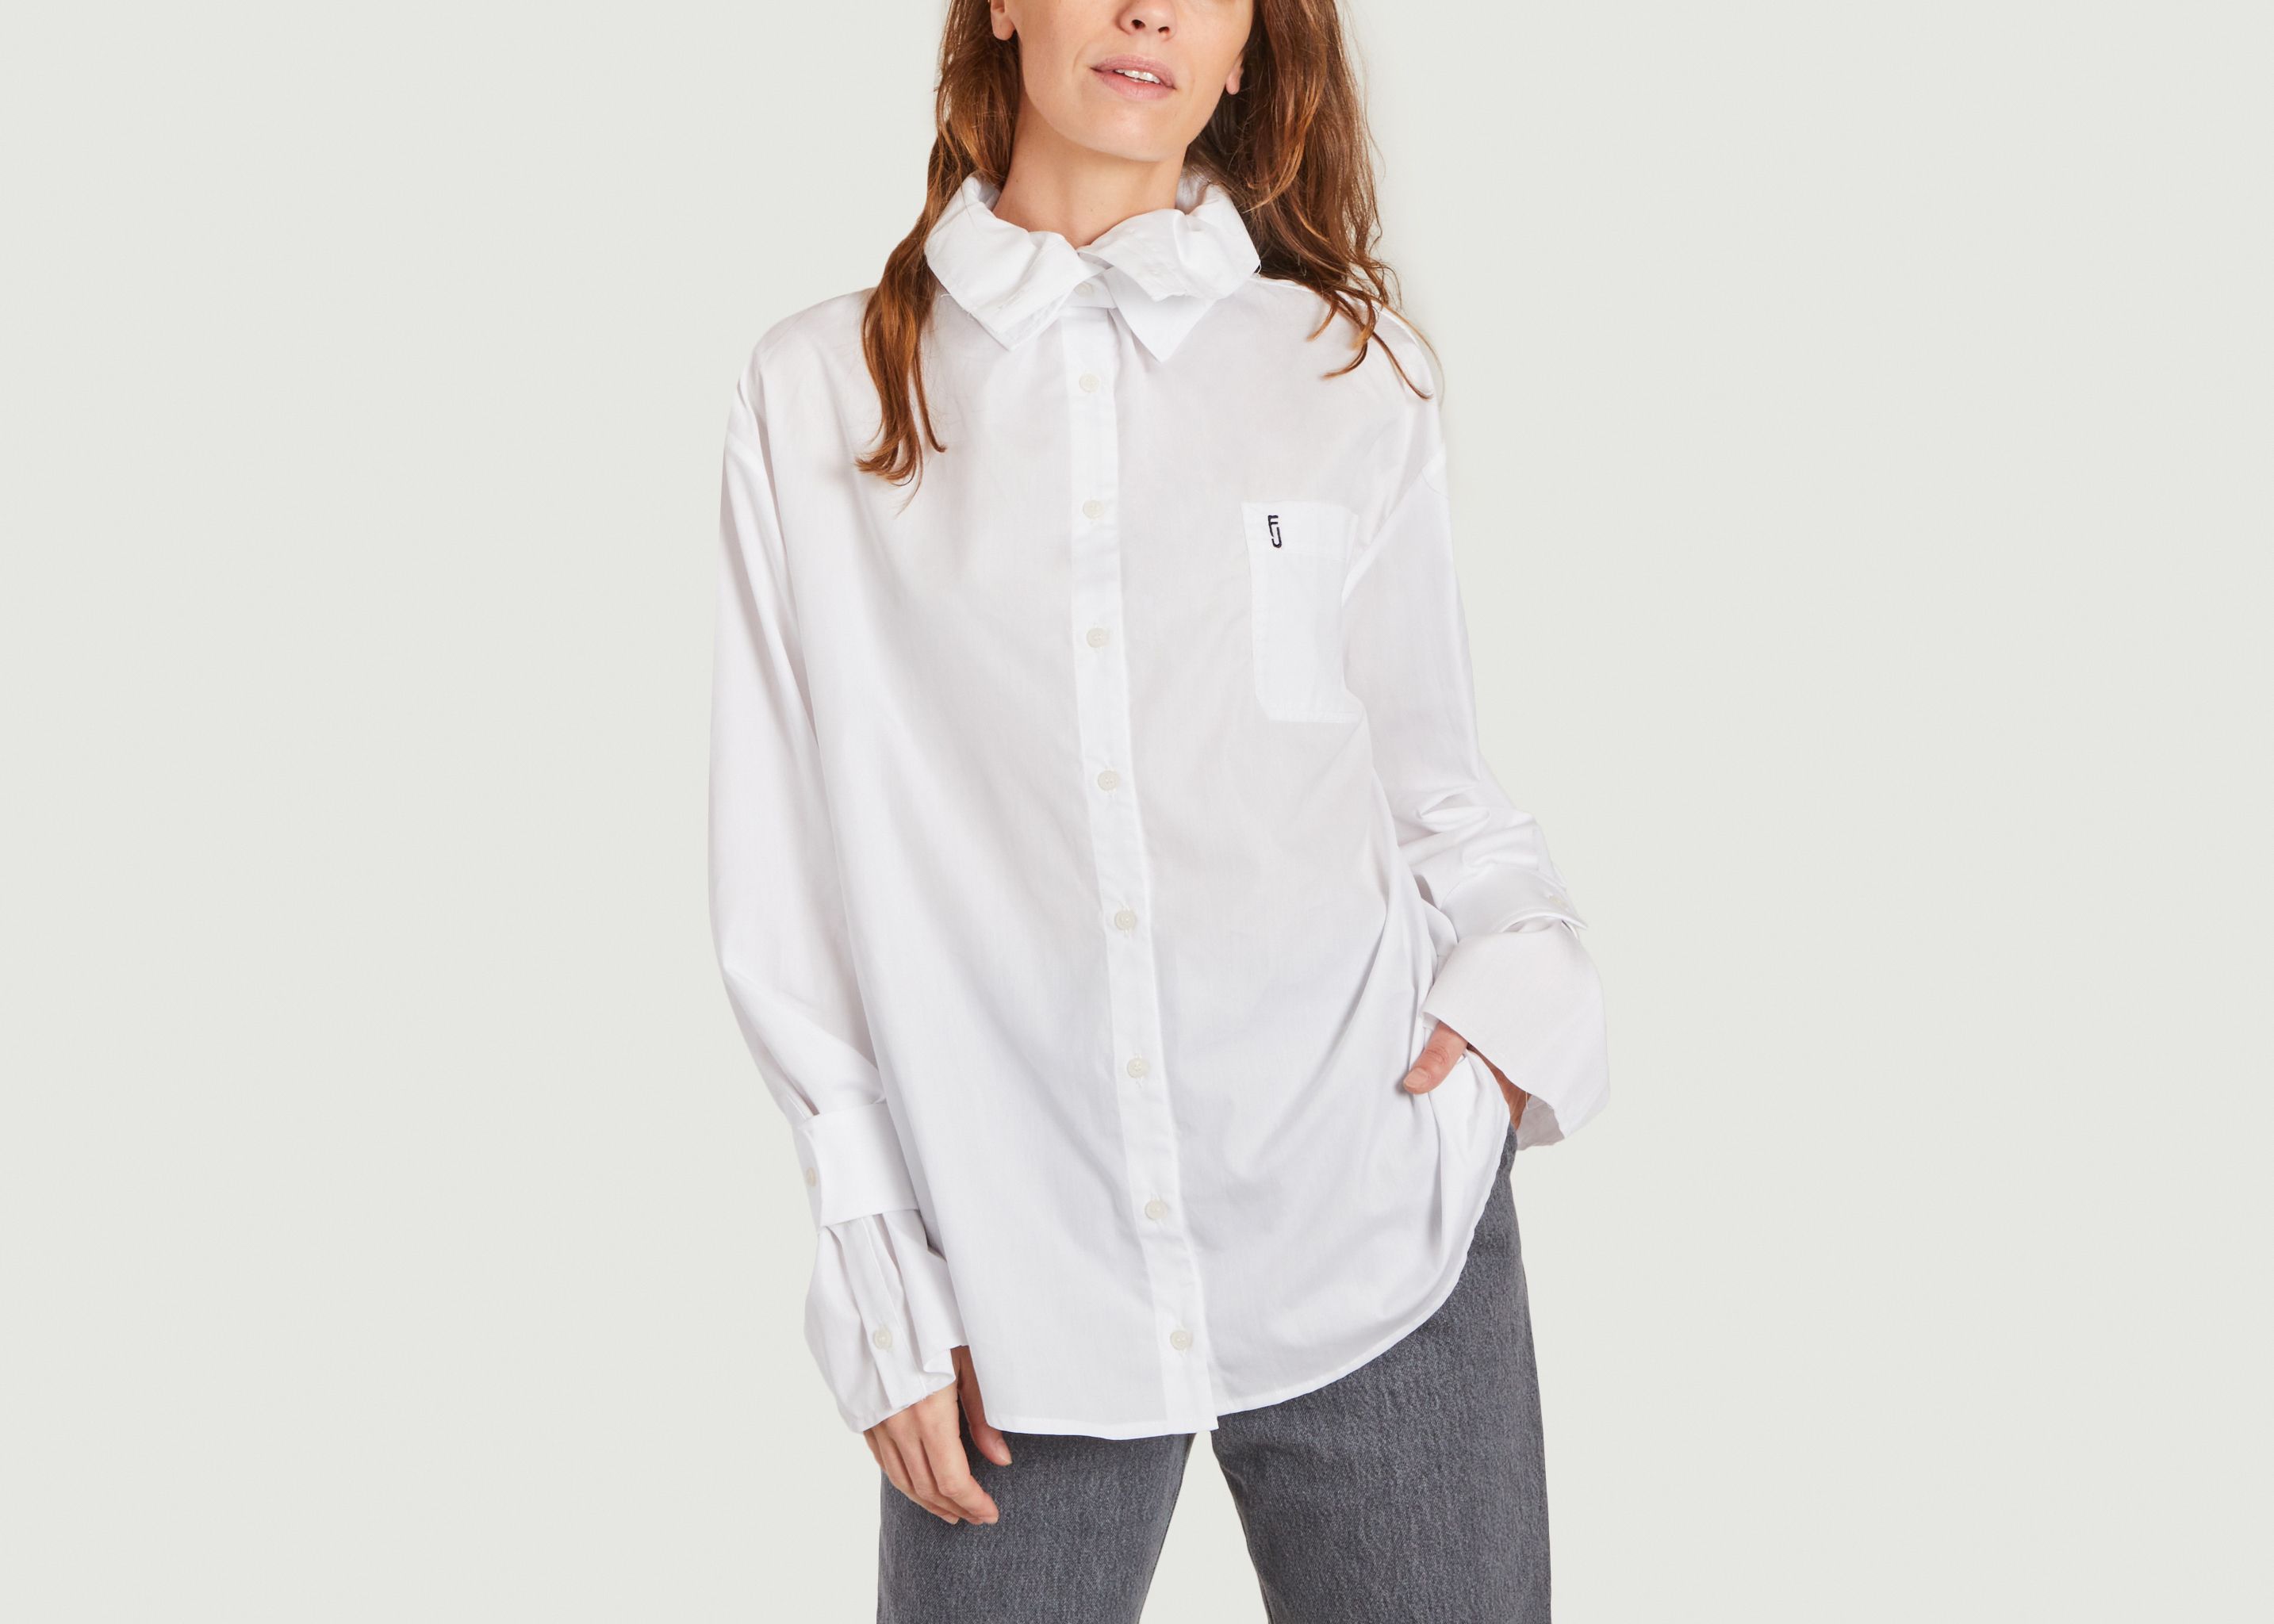 Coco shirt with double collar - Façon Jacmin